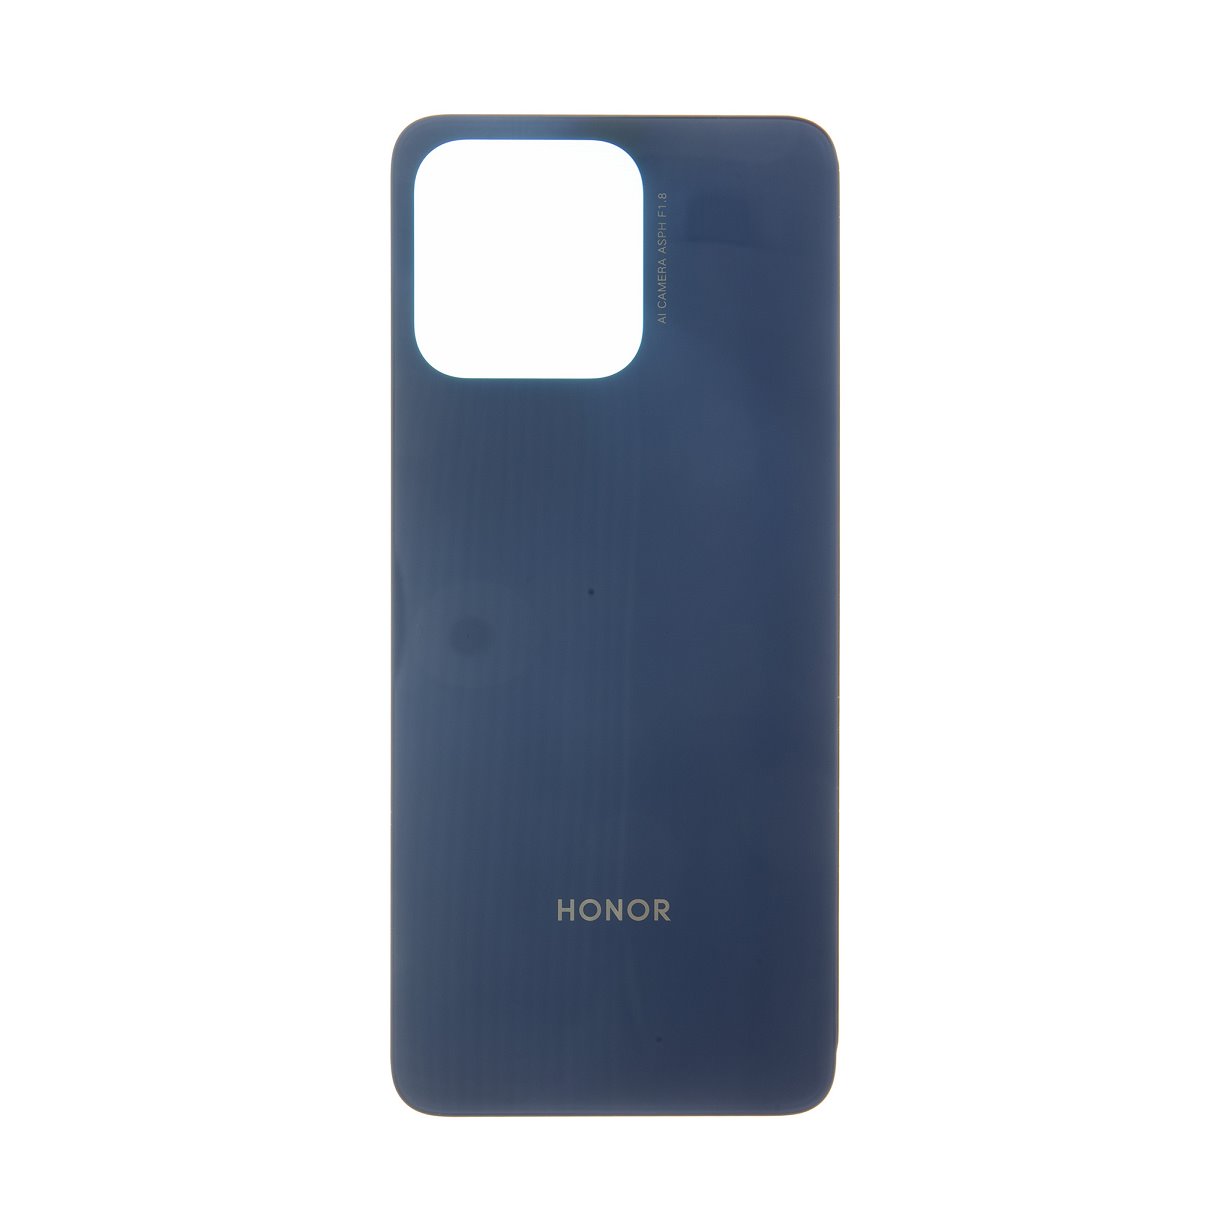 Zadní kryt baterie pro Honor X6, ocean blue